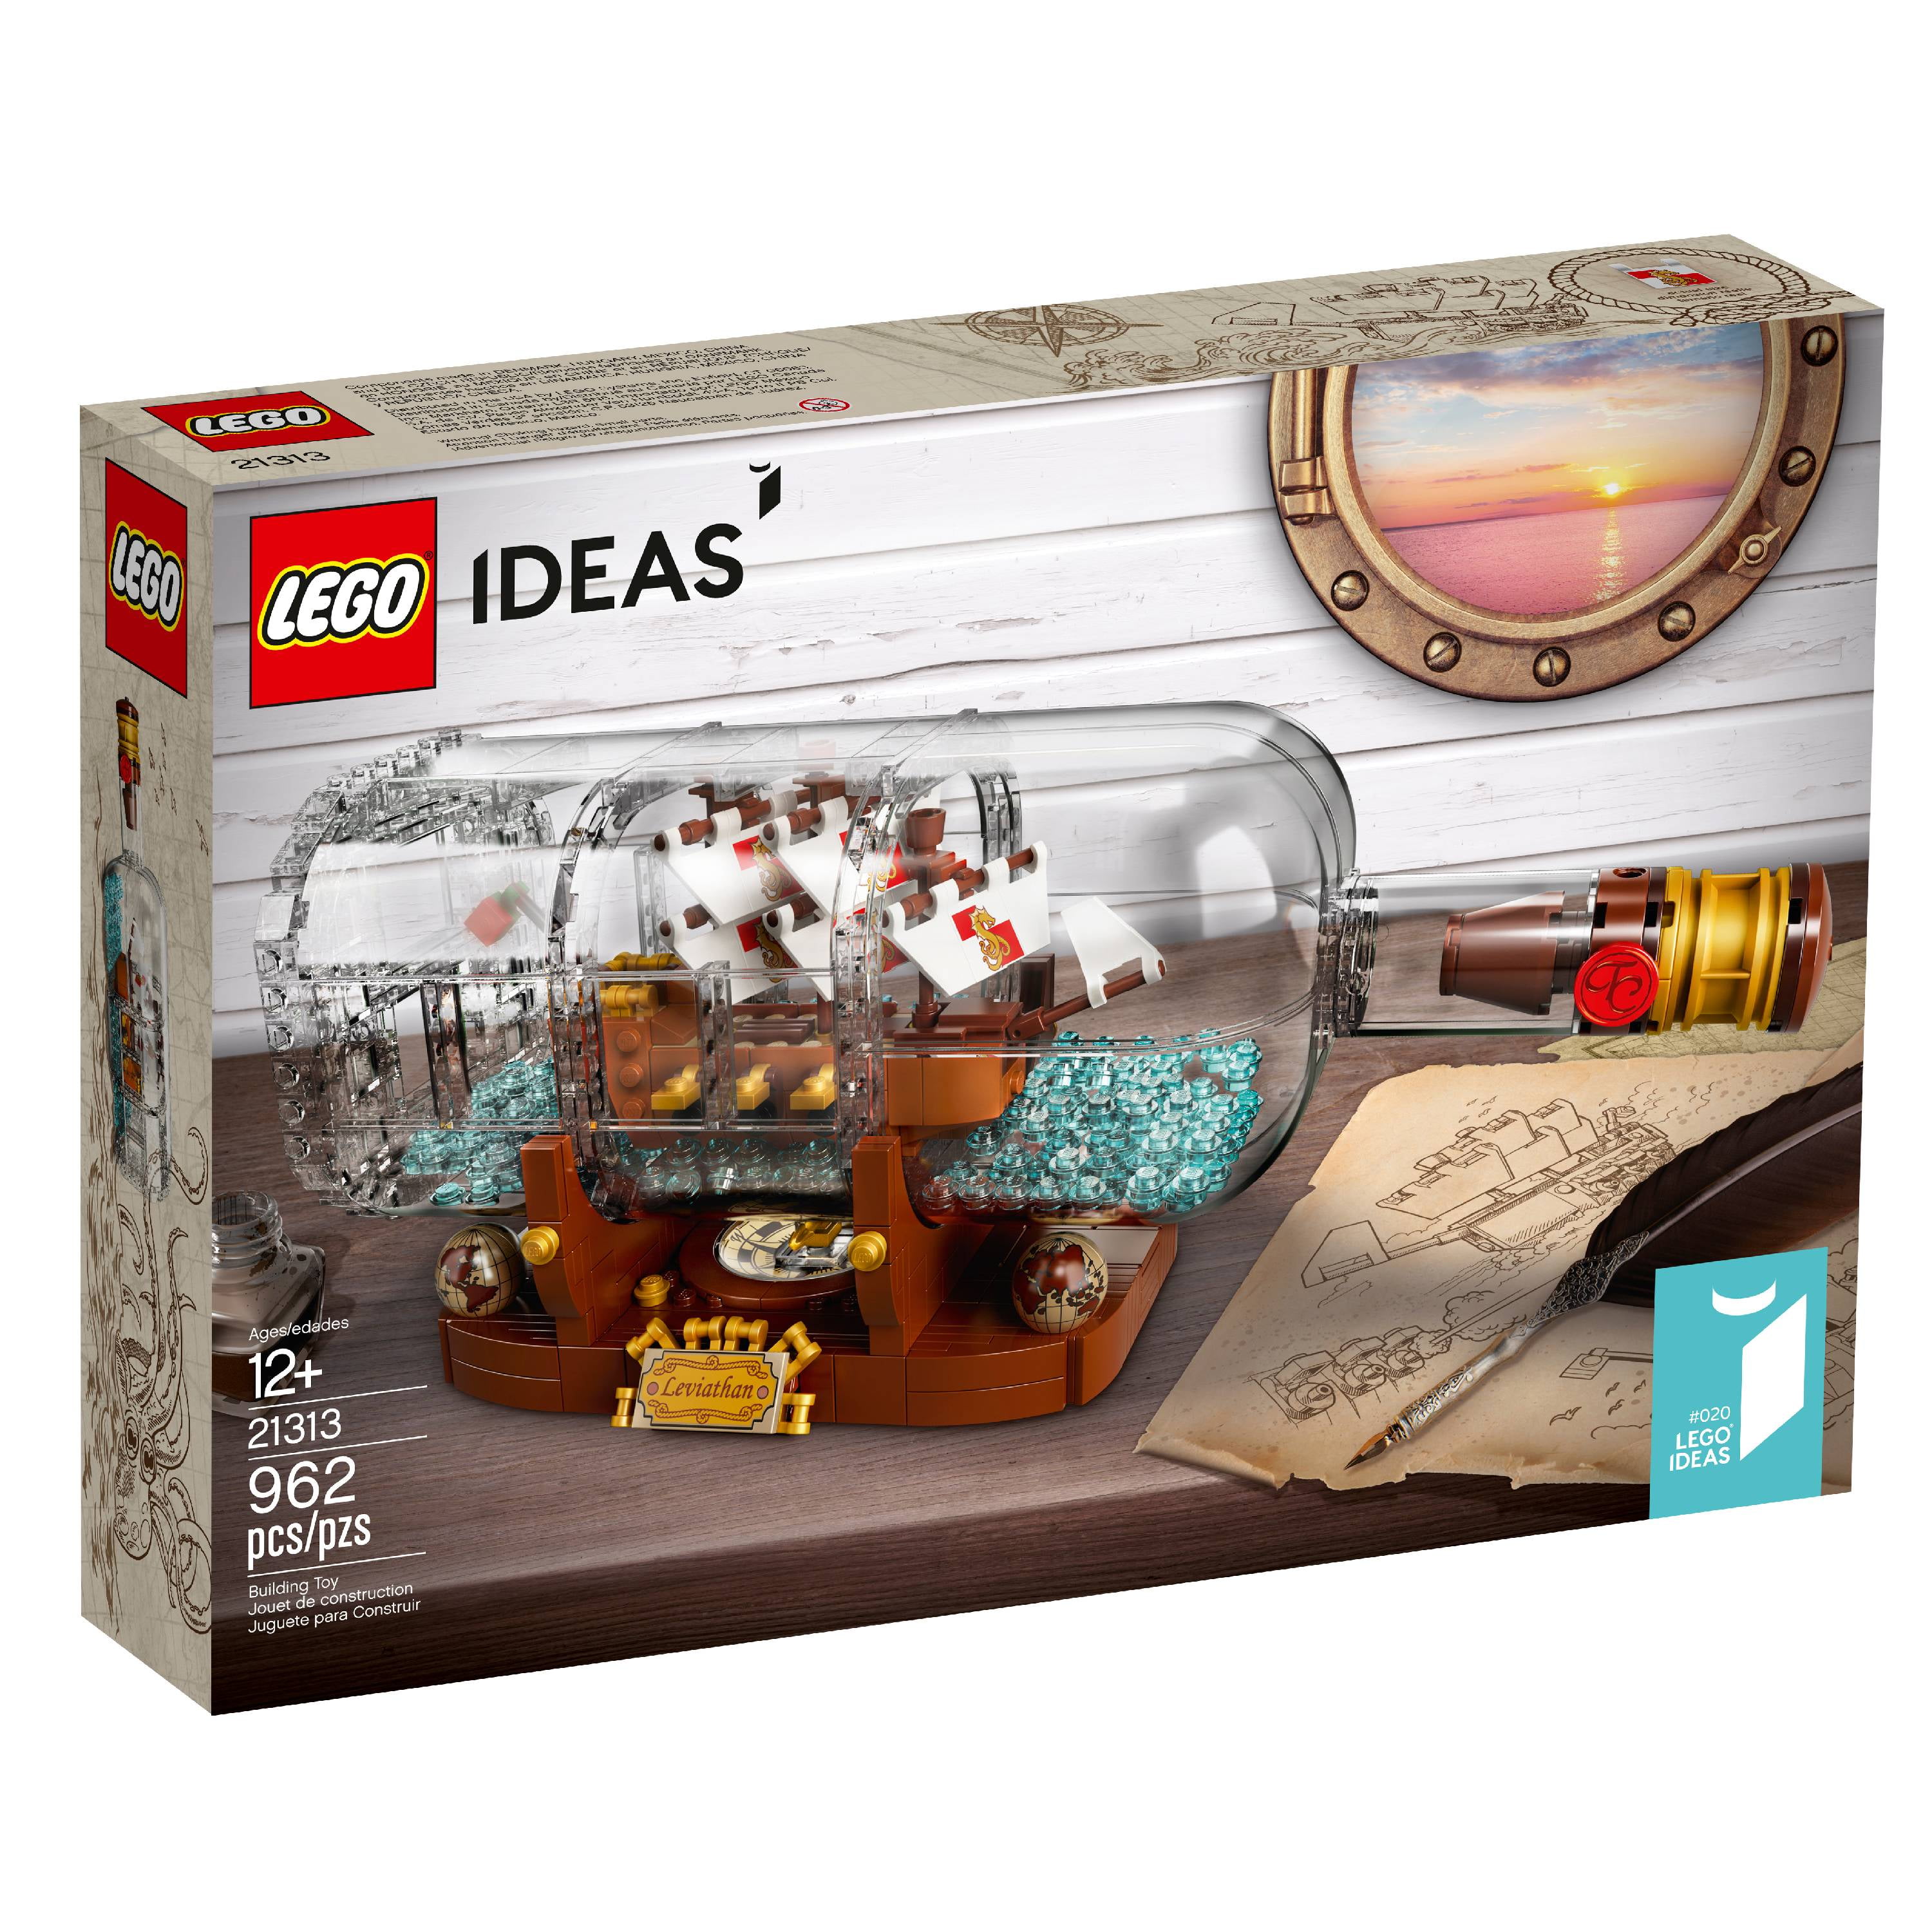 gijzelaar Boomgaard Clancy LEGO Ideas Ship in a Bottle&nbsp;21313 - Walmart.com